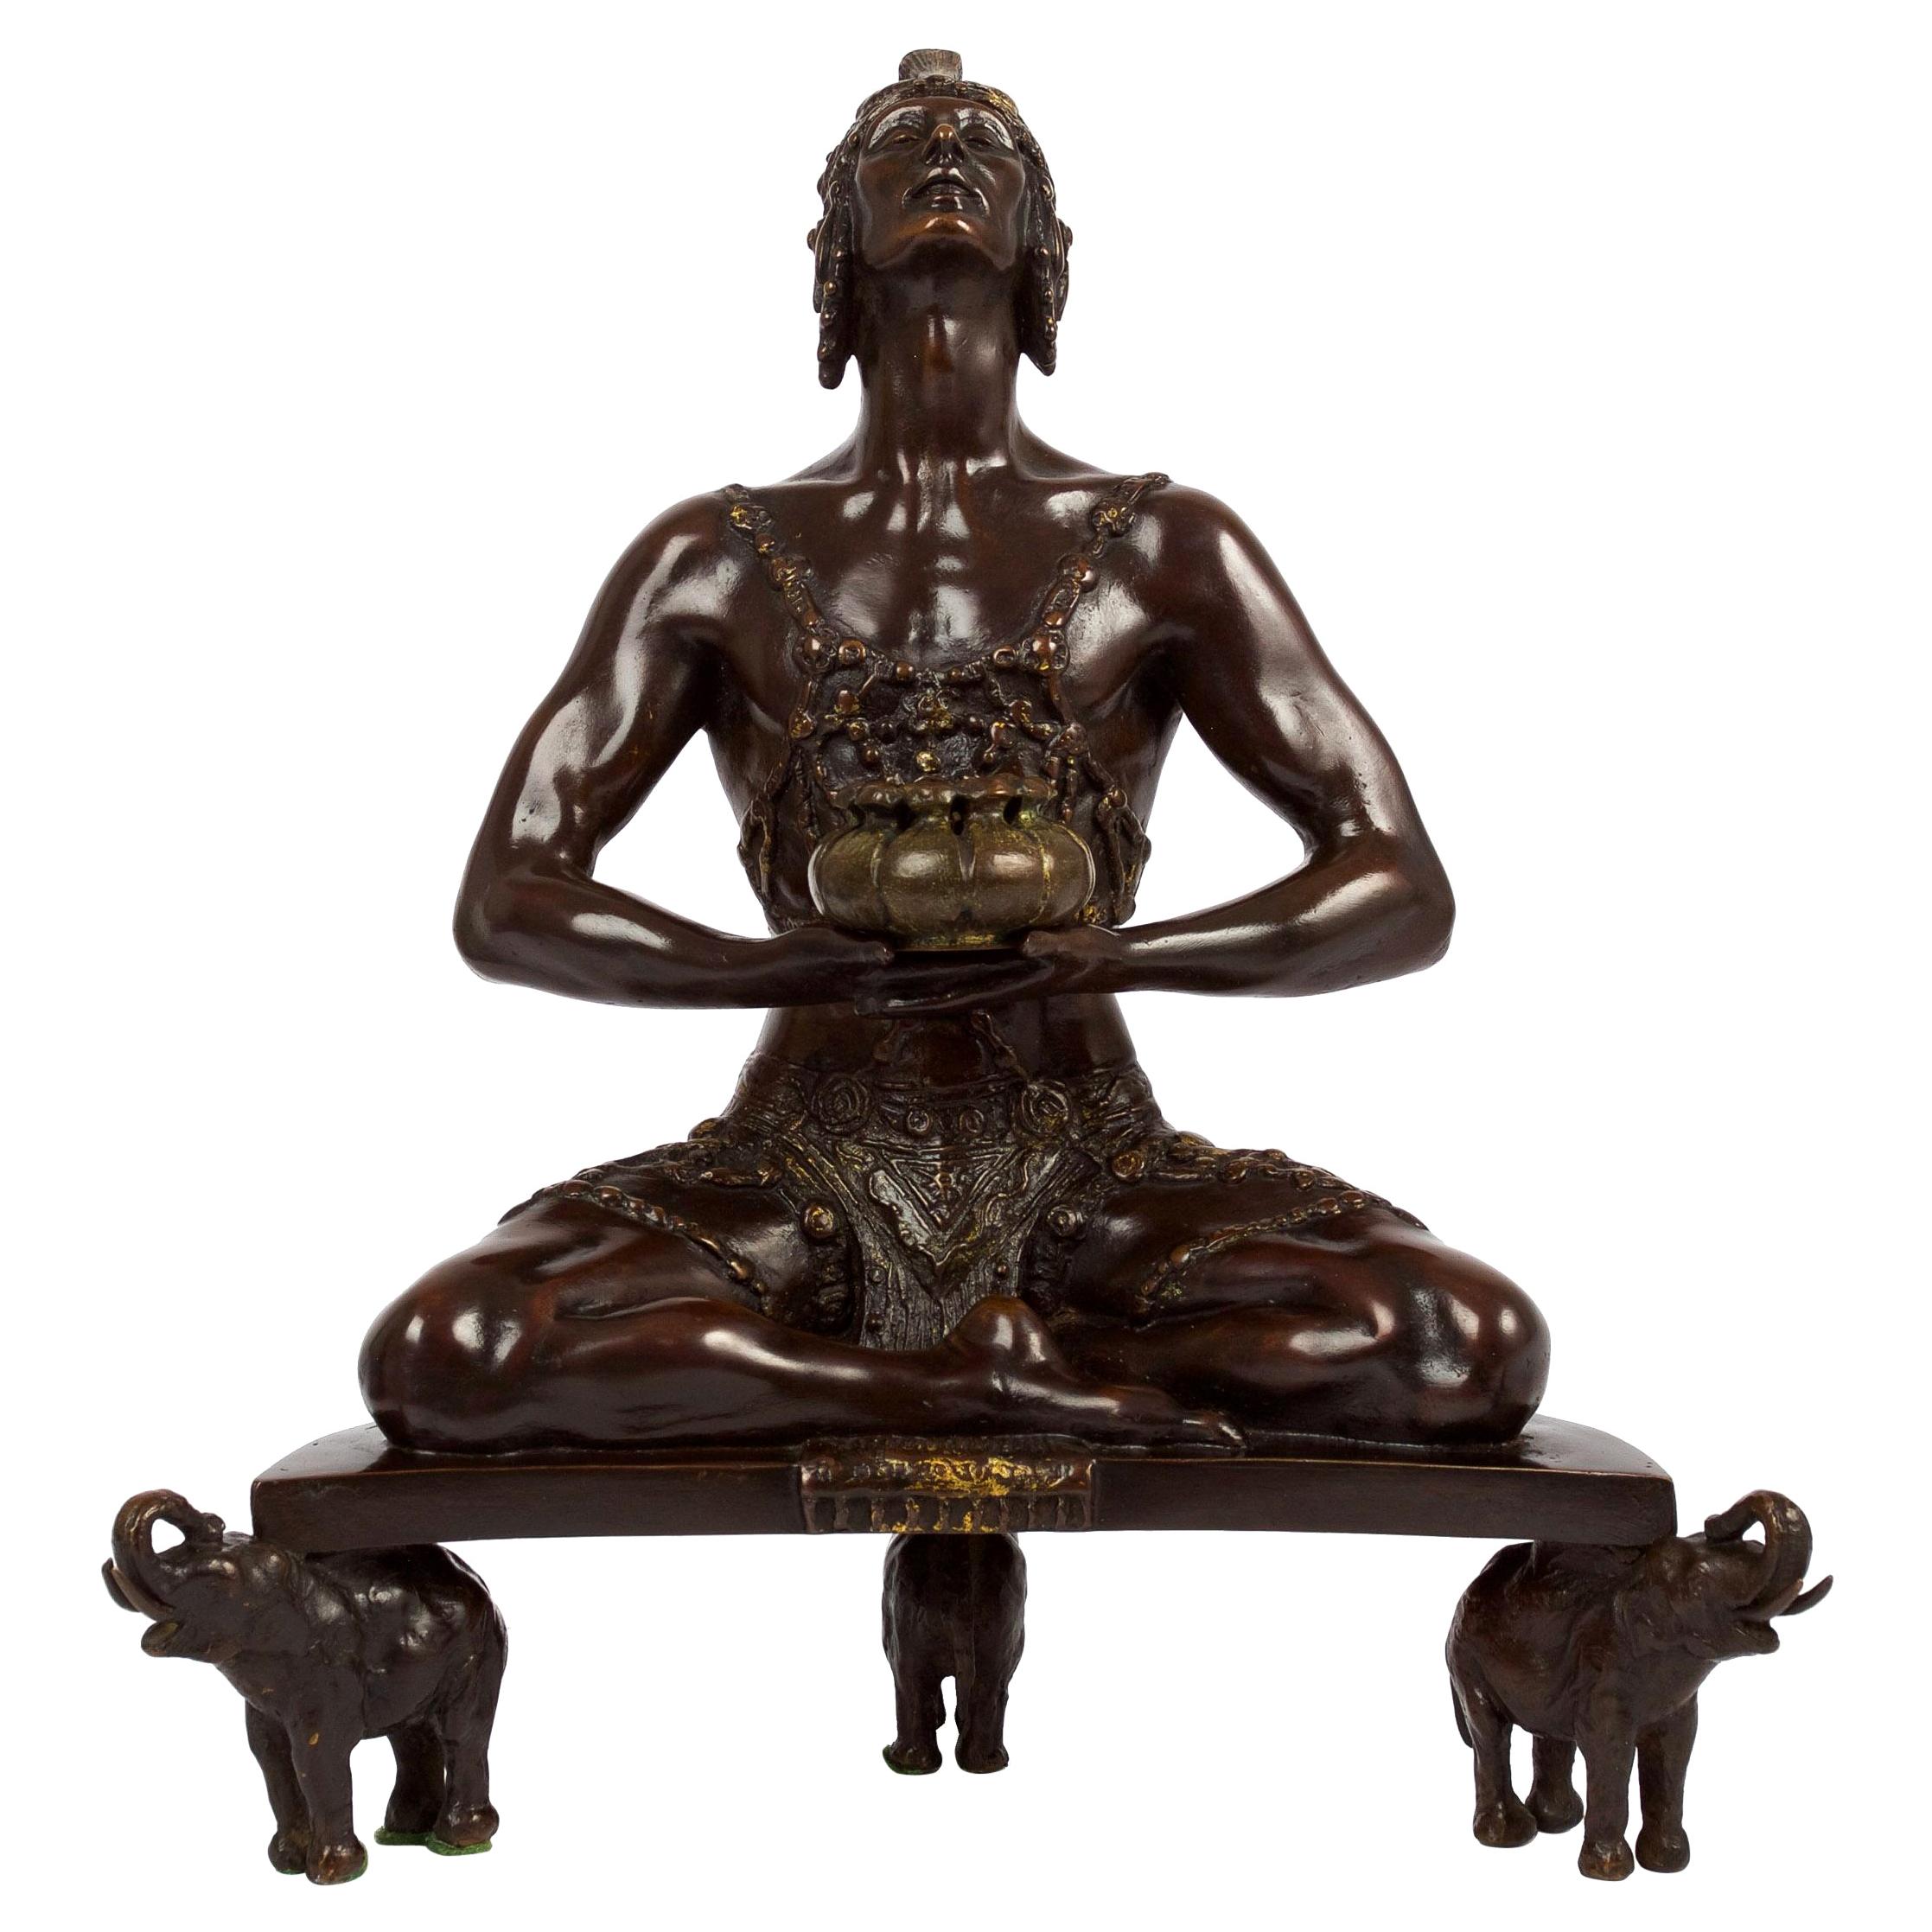 American Bronze Sculpture "Hindu Incense Burner" by Malvina Hoffman circa 1920